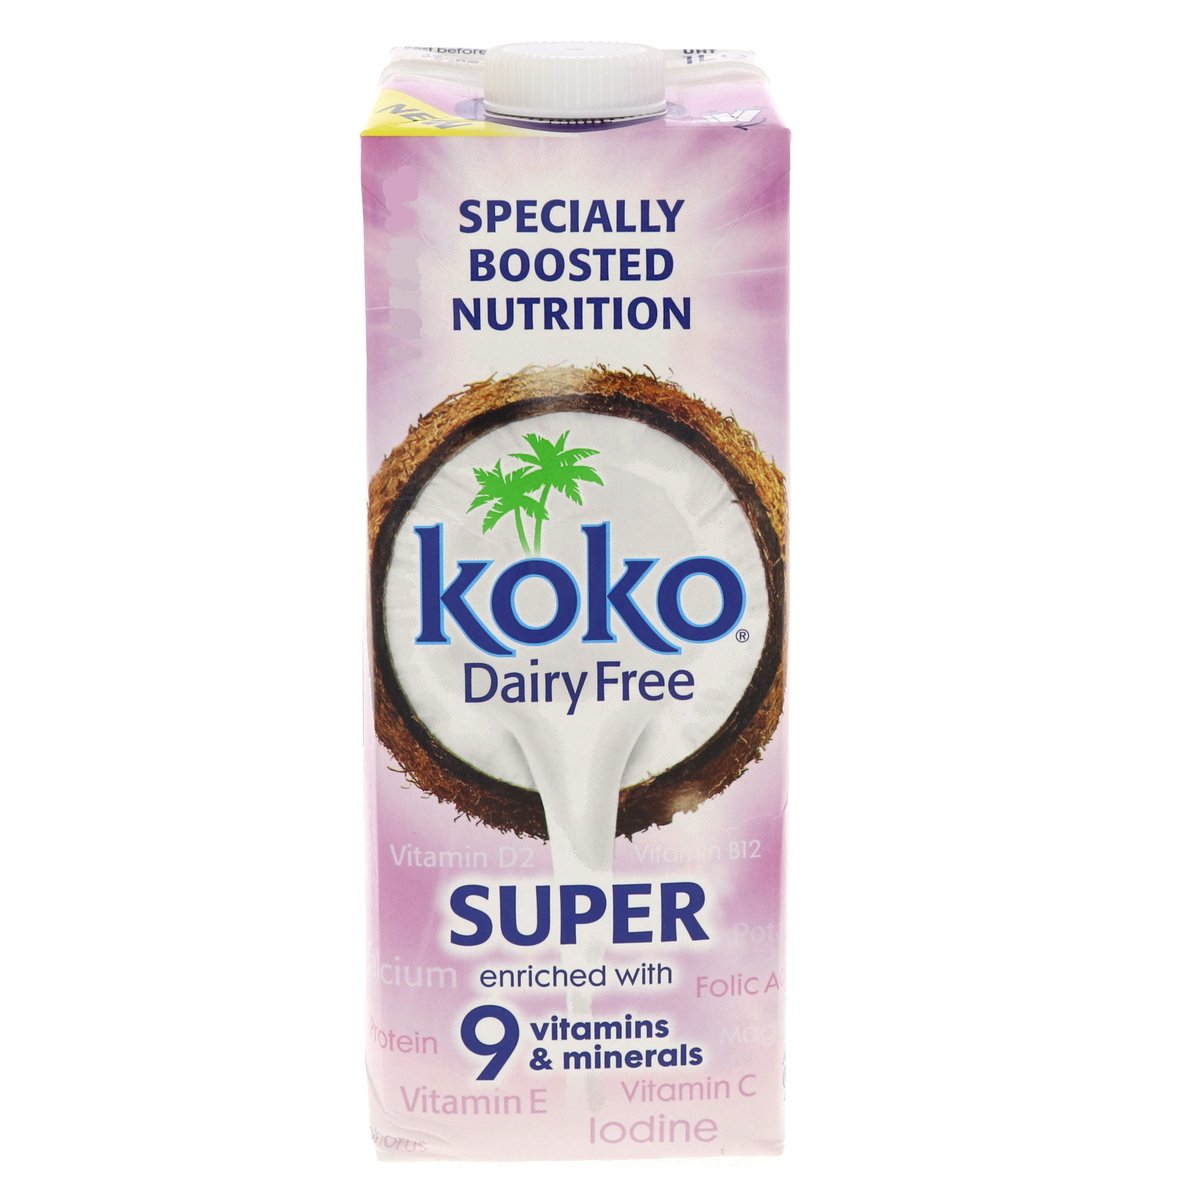 Koko Dairy Free Super Milk With, 9 Vitamins, 1 Litre